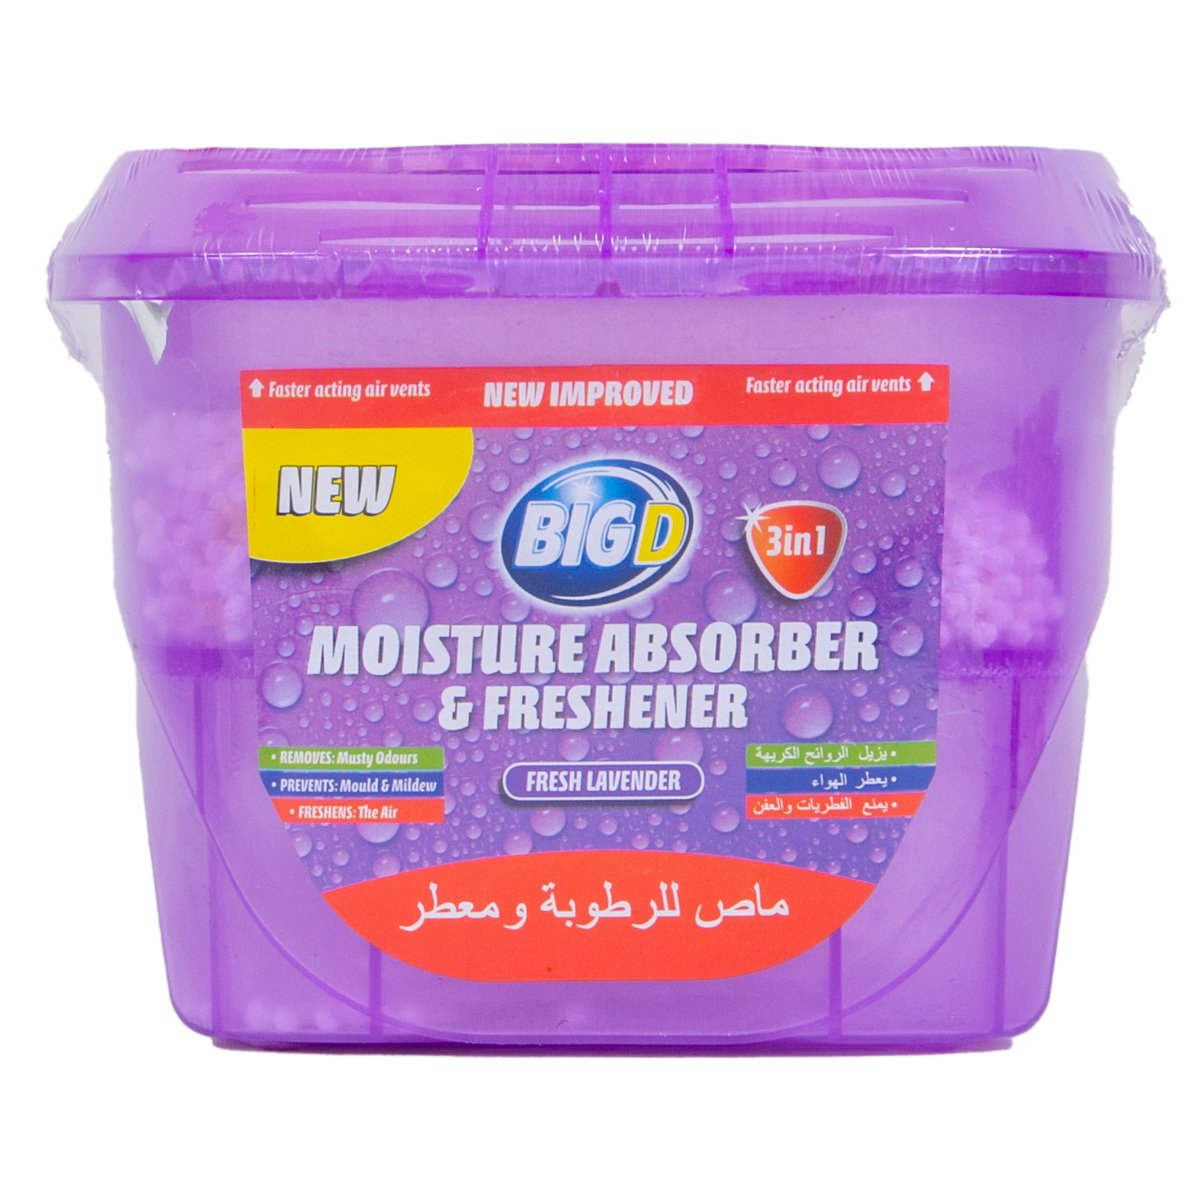 Big-D Moisture Absorber & Freshener Lavender, 1 pc